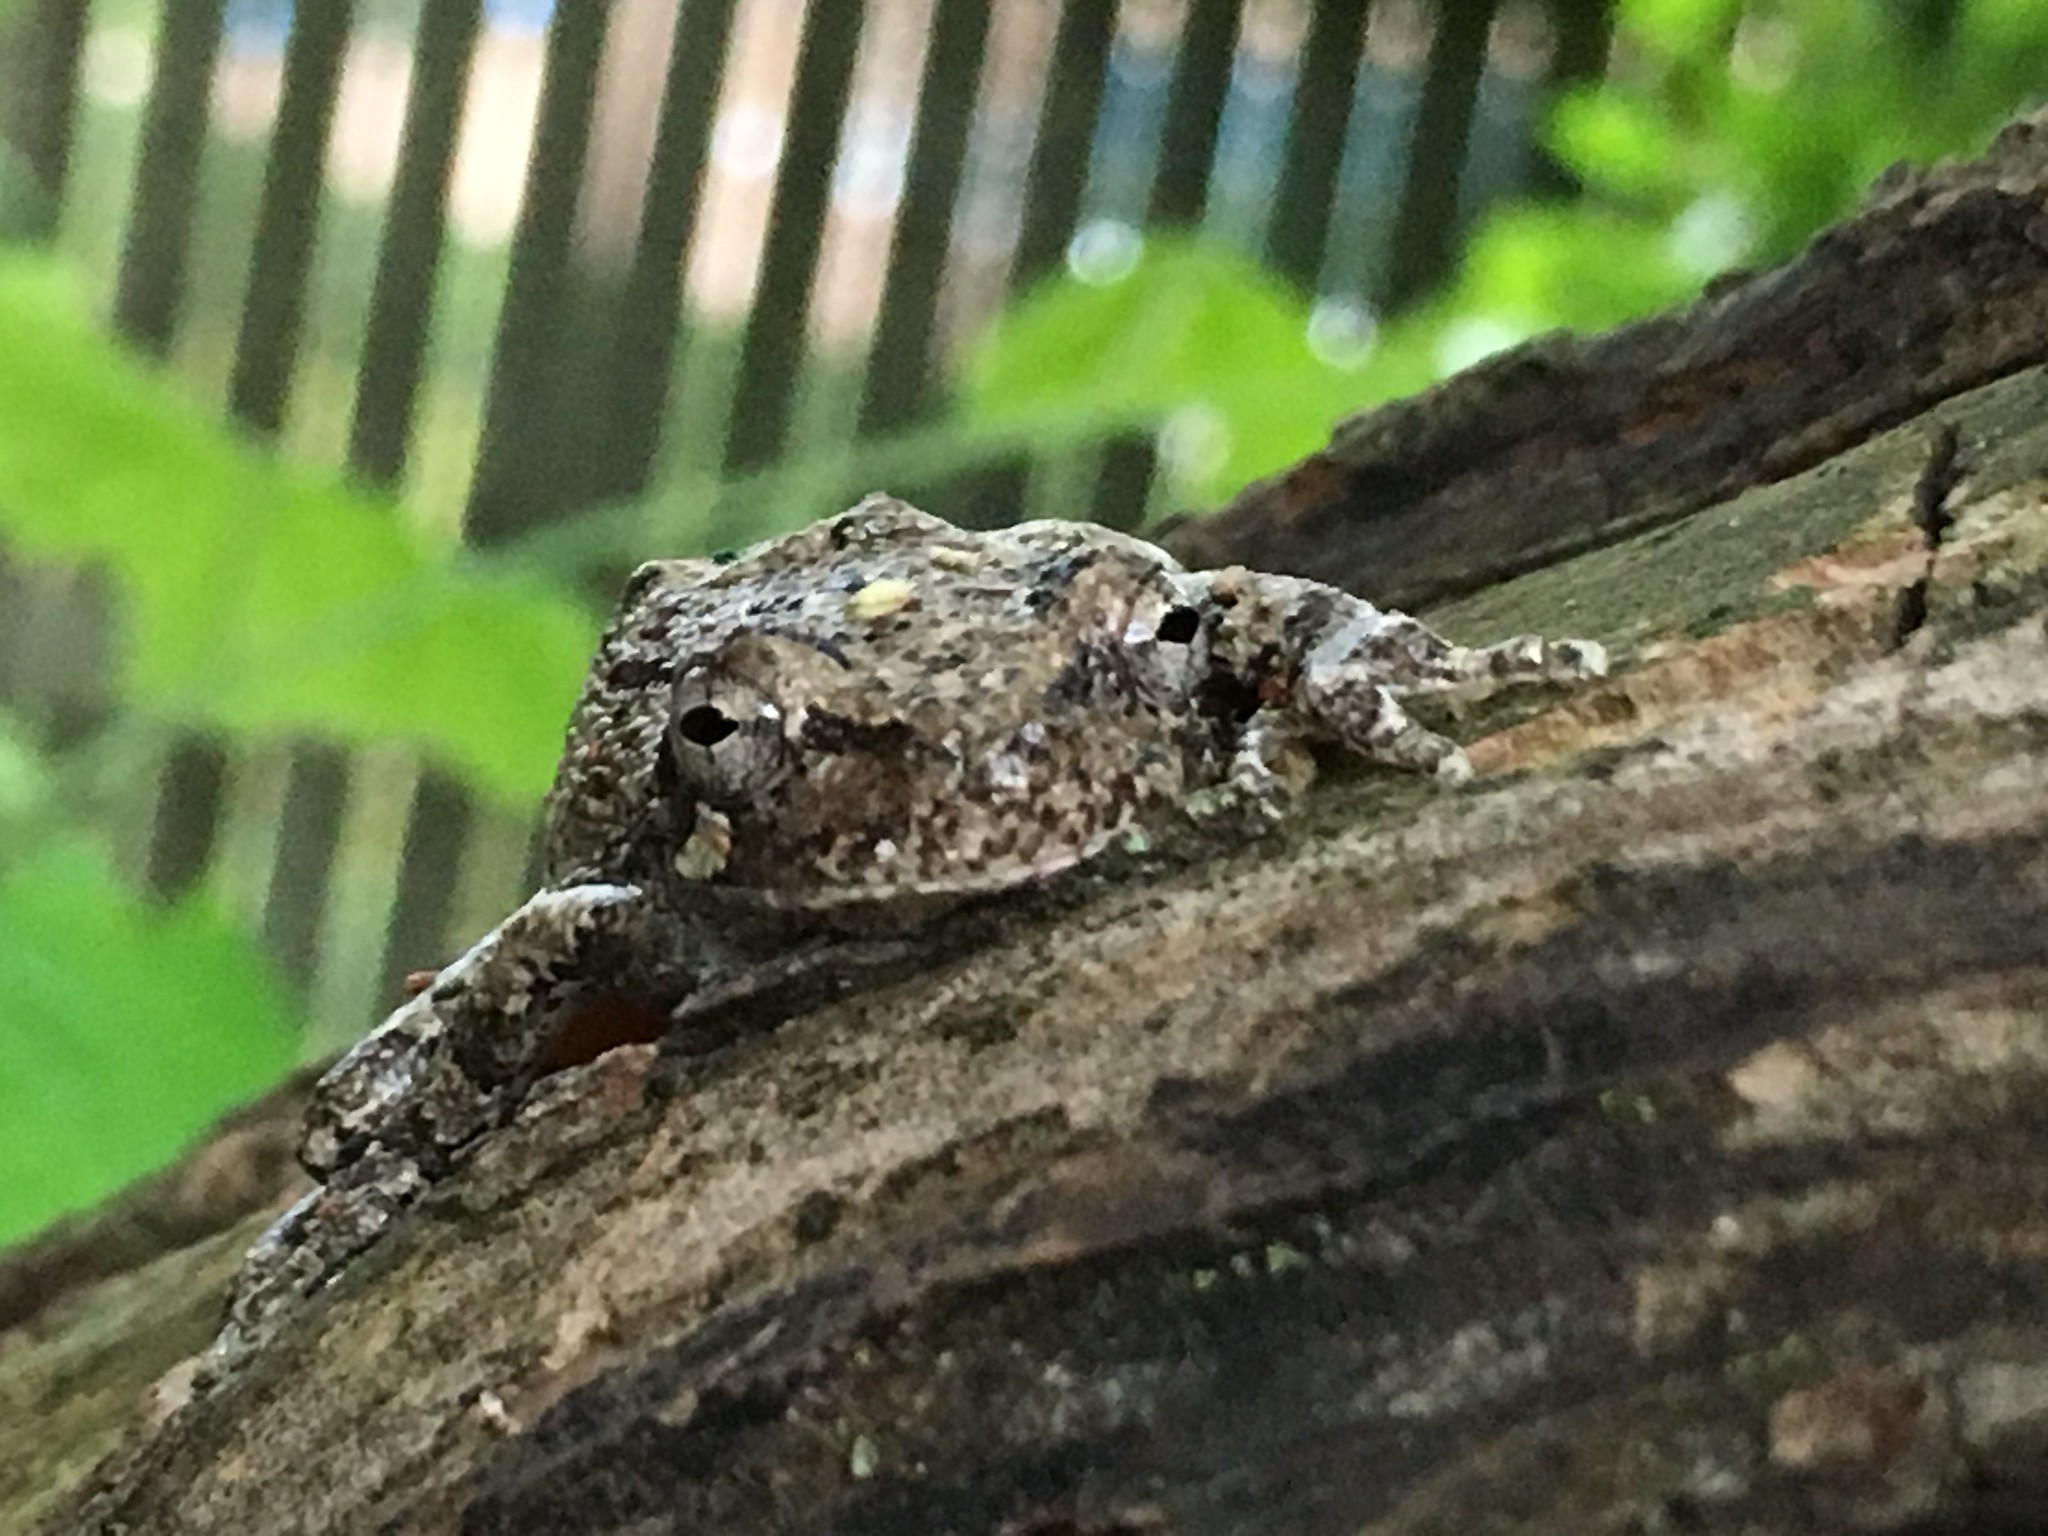 My new frog friend